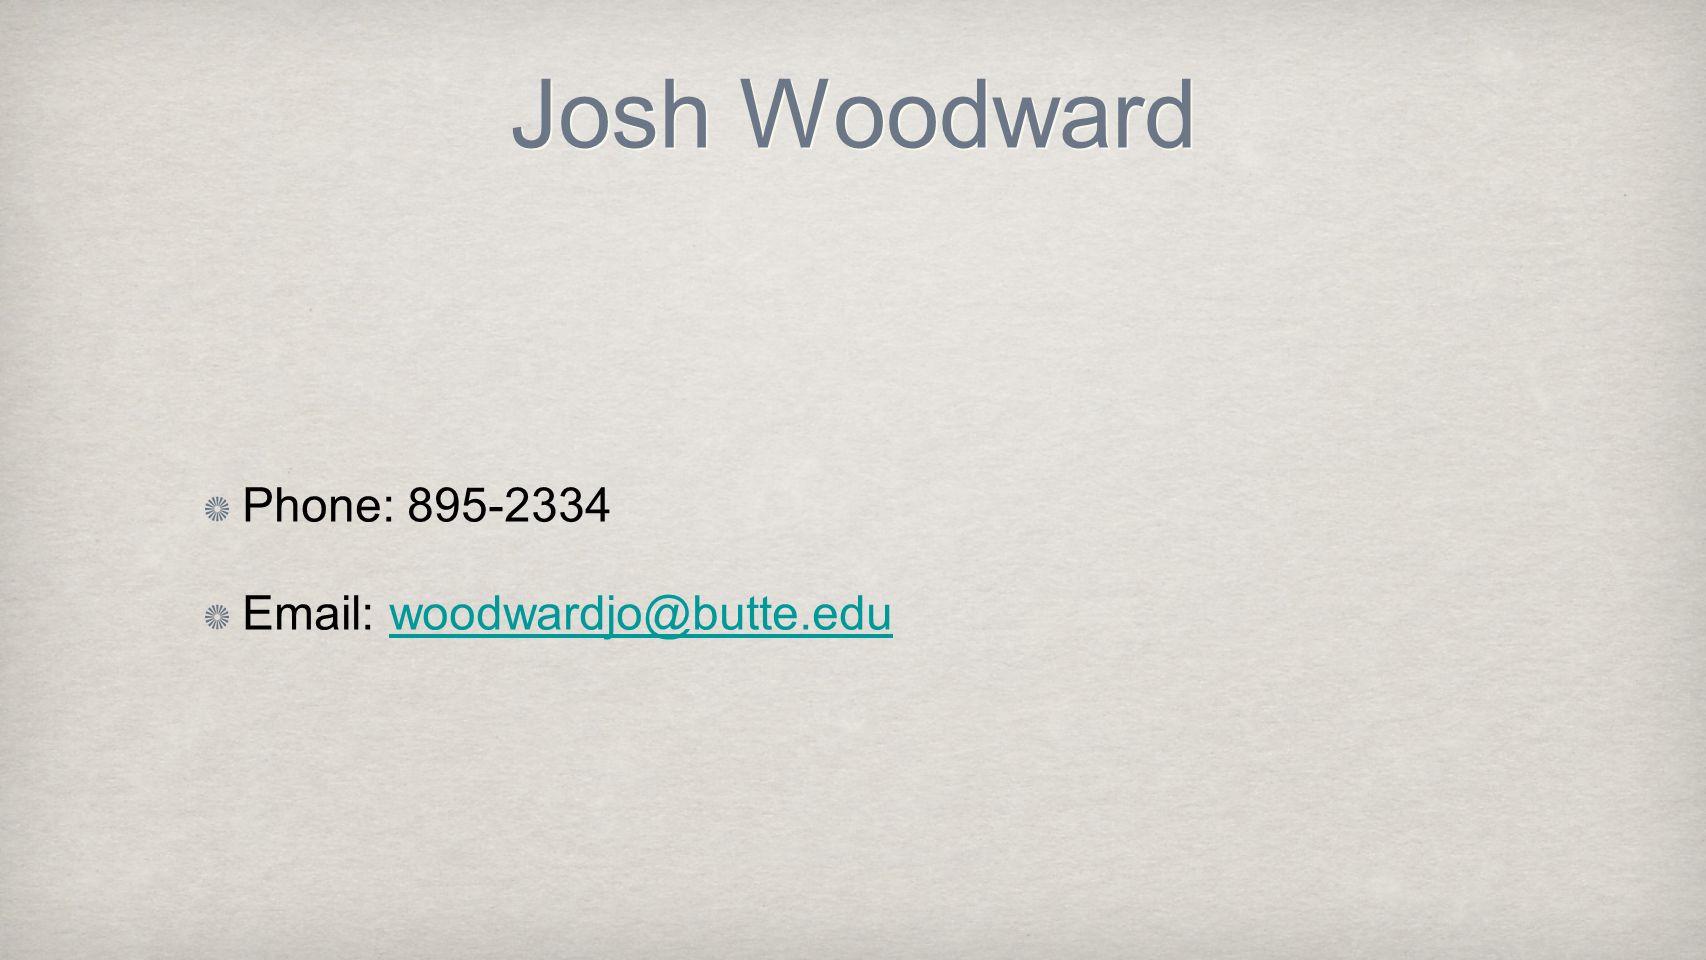 Josh Woodward Phone: